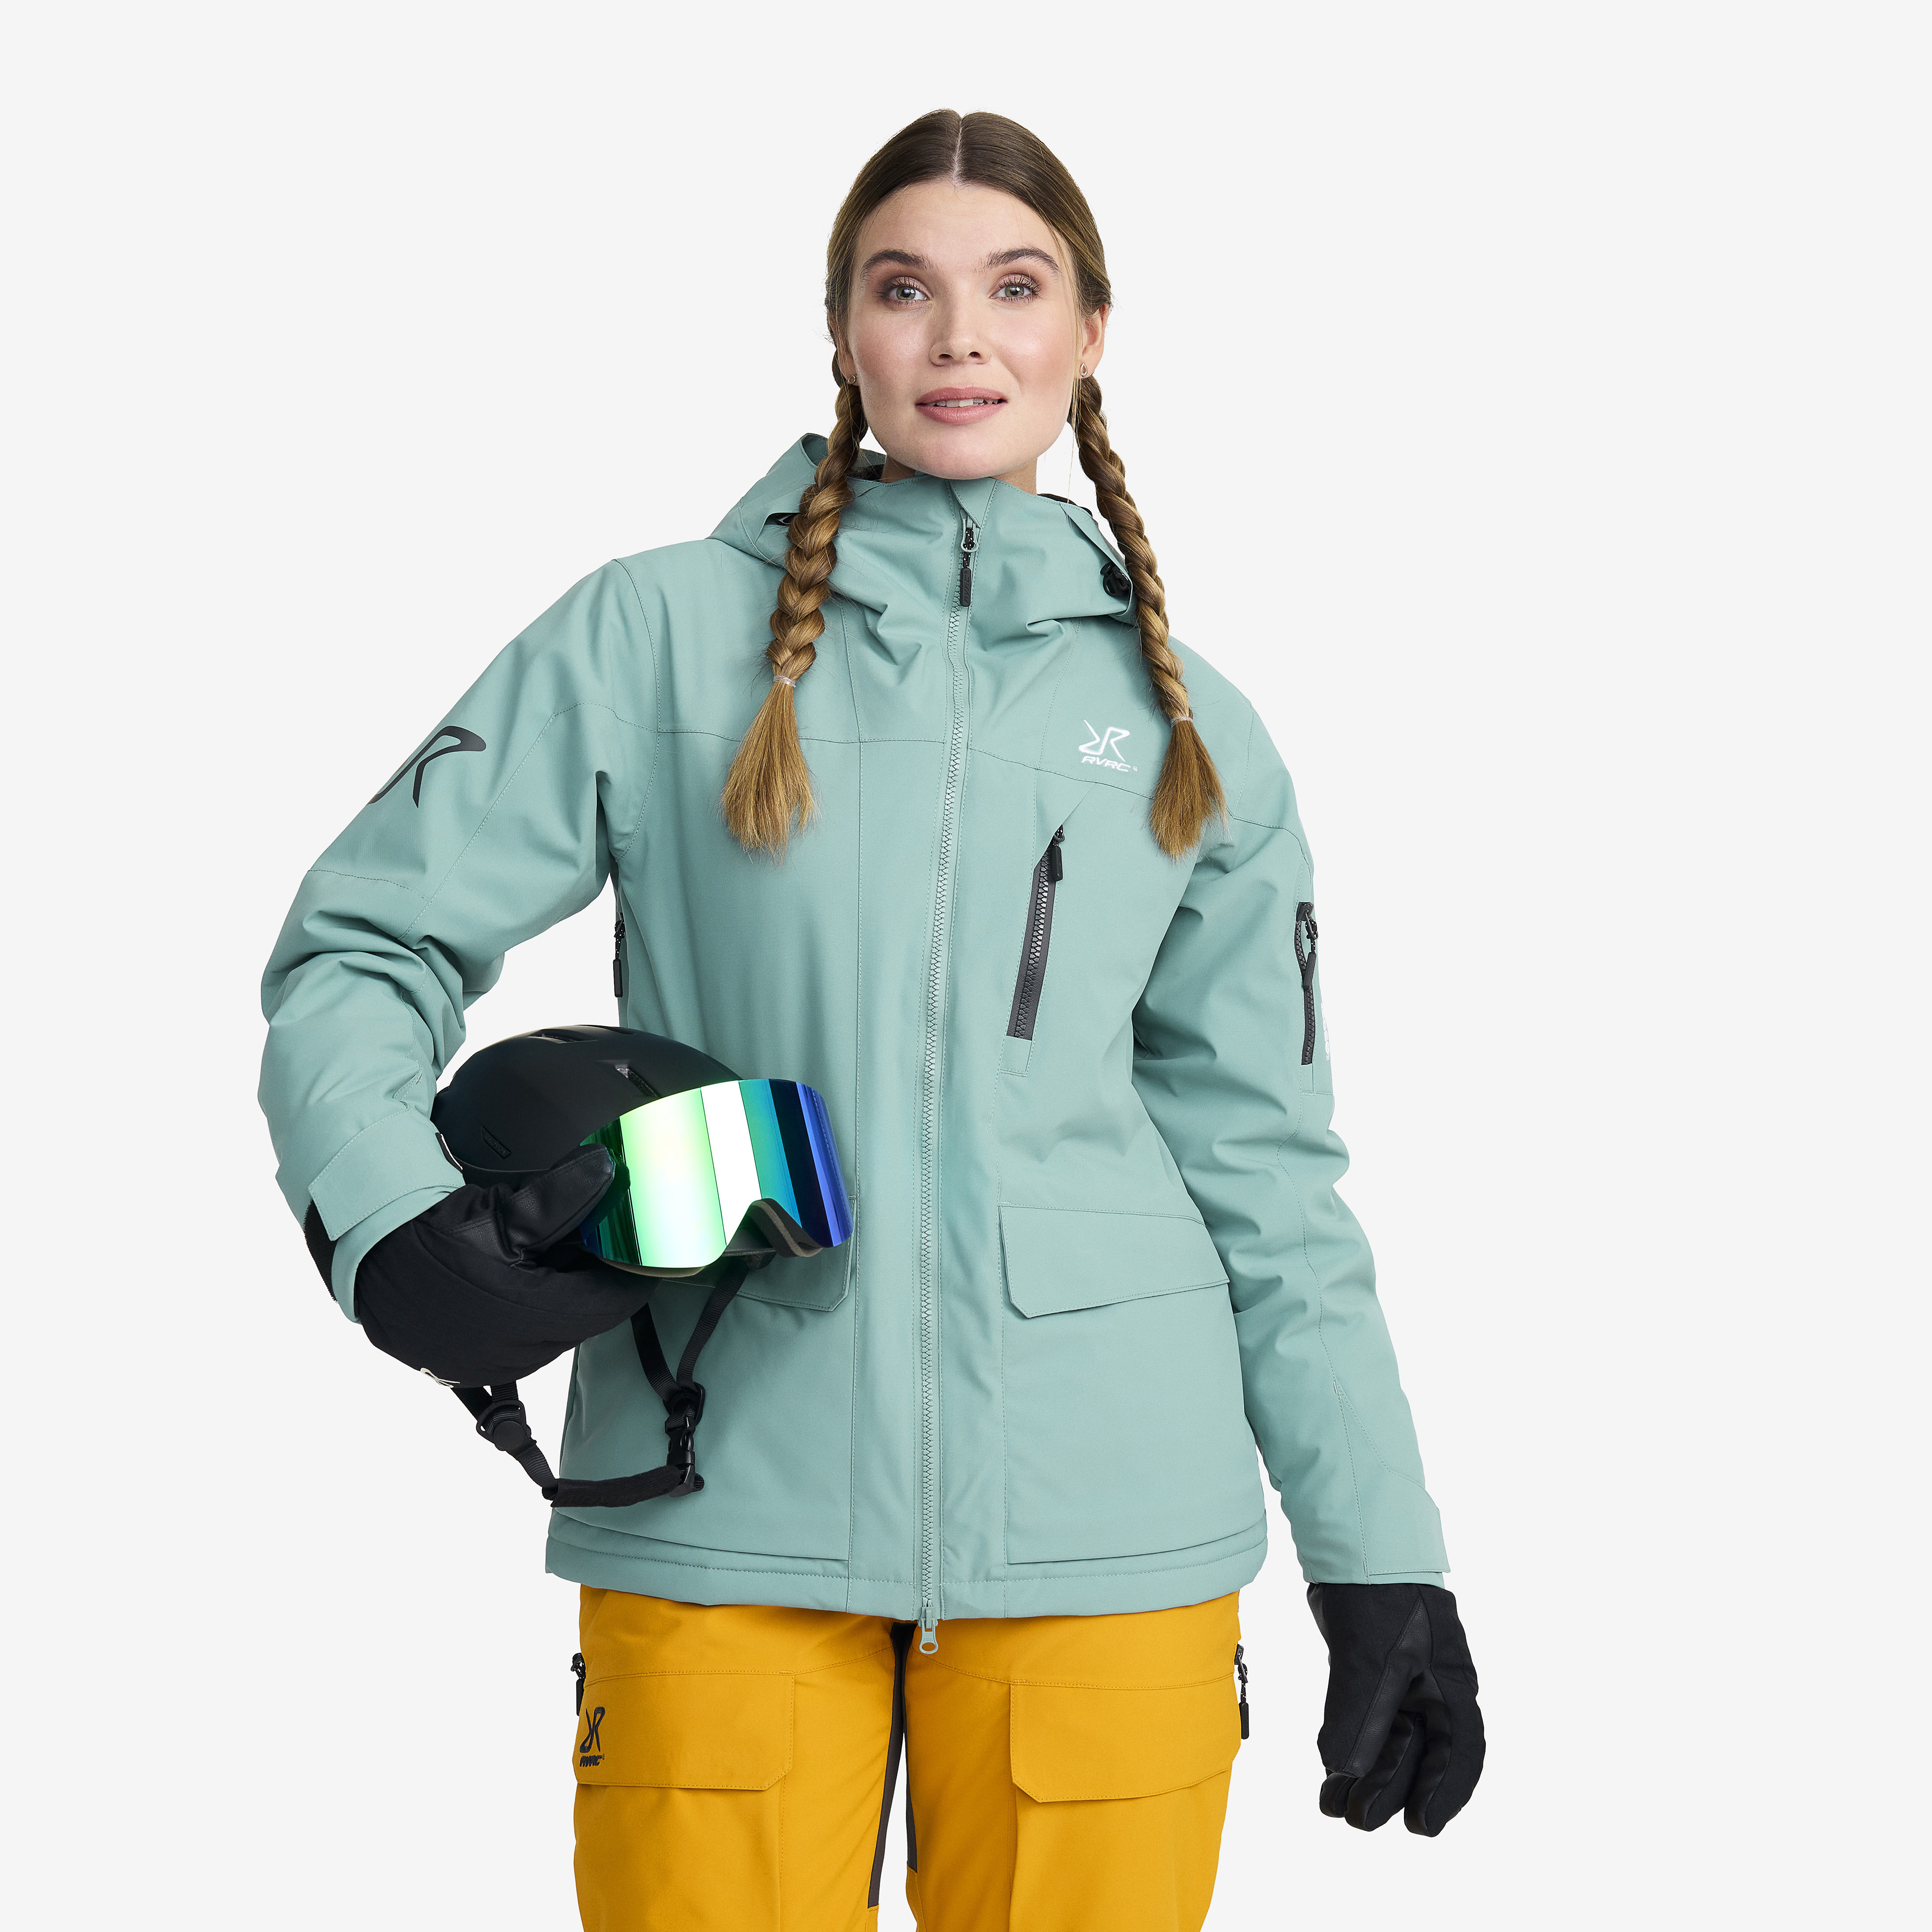 Halo 2L Insulated Ski Jacket Arctic Naiset